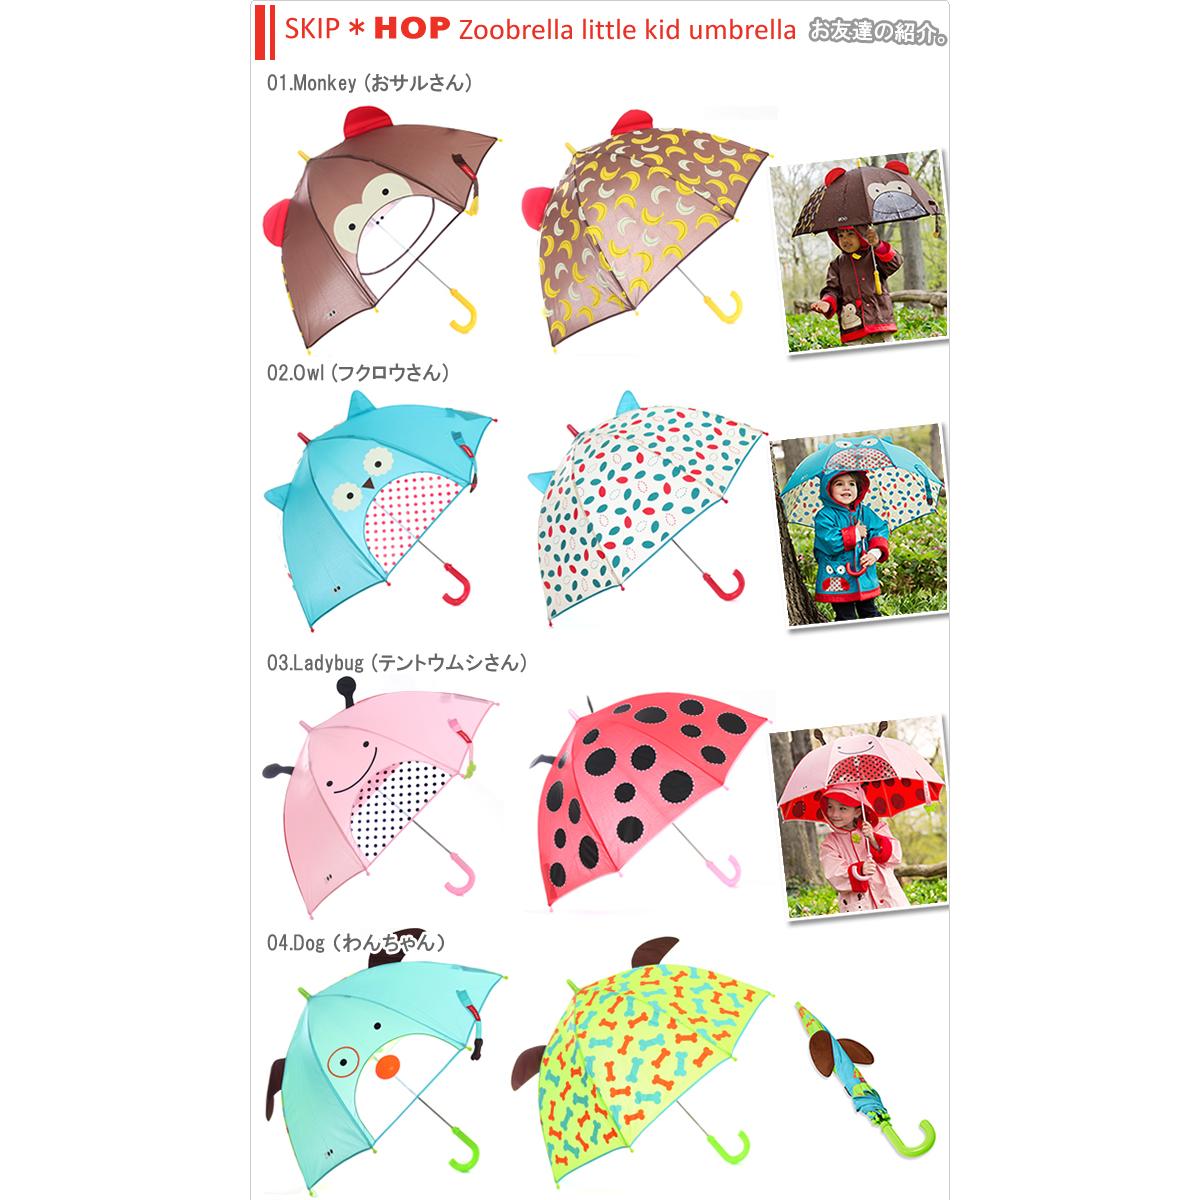 Skip Hop ZOOBRELLA Little Kid Umbrella 100%Authentic/Genuine.